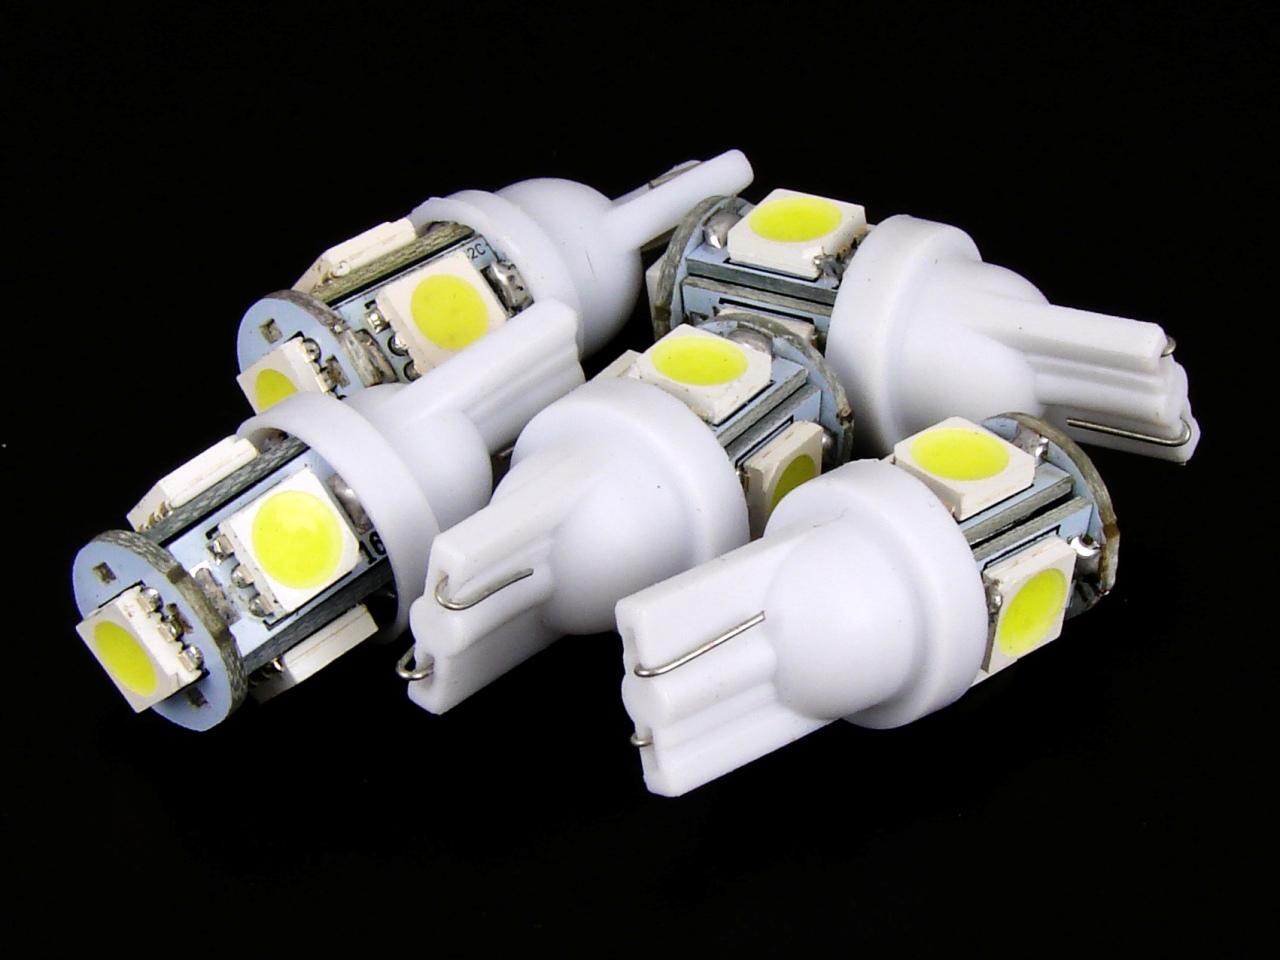   _5 LED T10 W5W 194 168 Car Light Bulbs